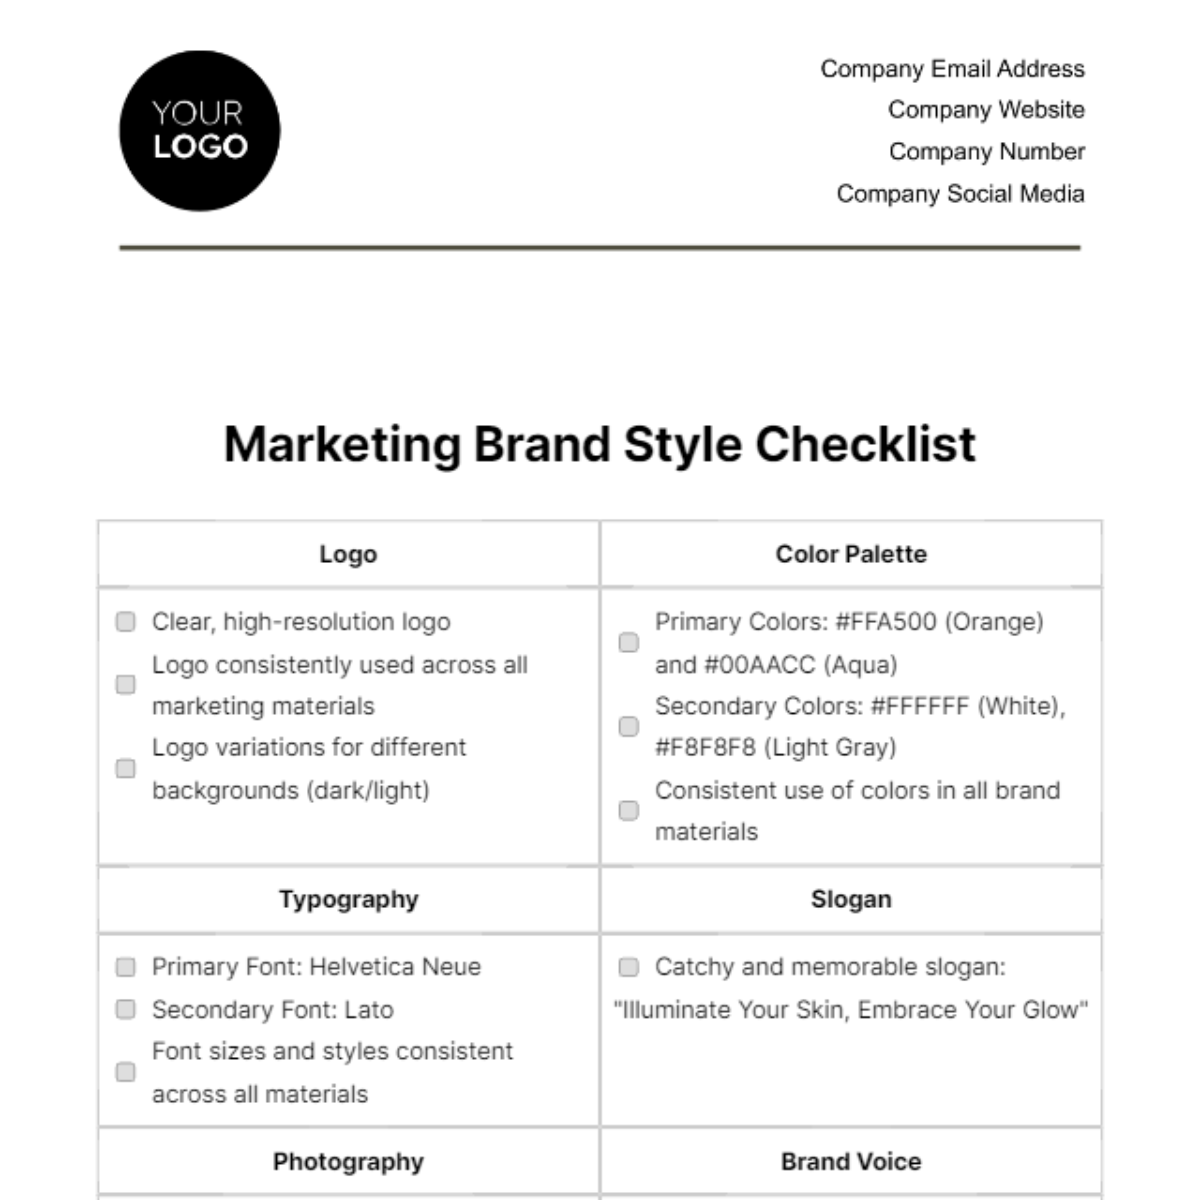 Marketing Brand Style Checklist Template